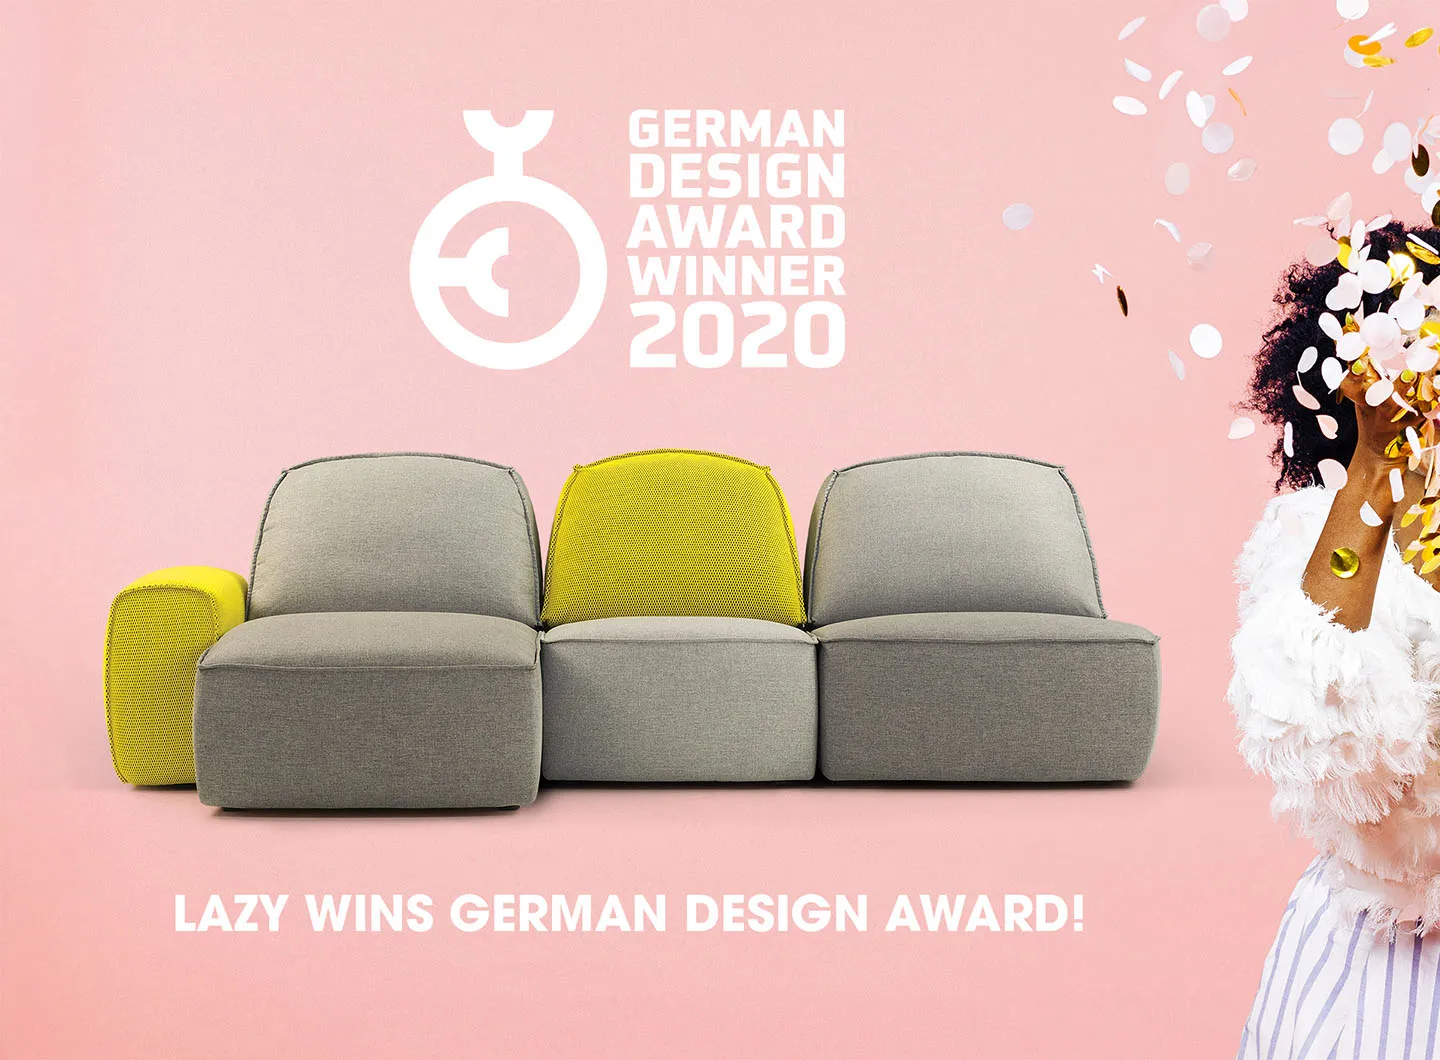 Lazy by Calia Italia  wins German Design Award 2020